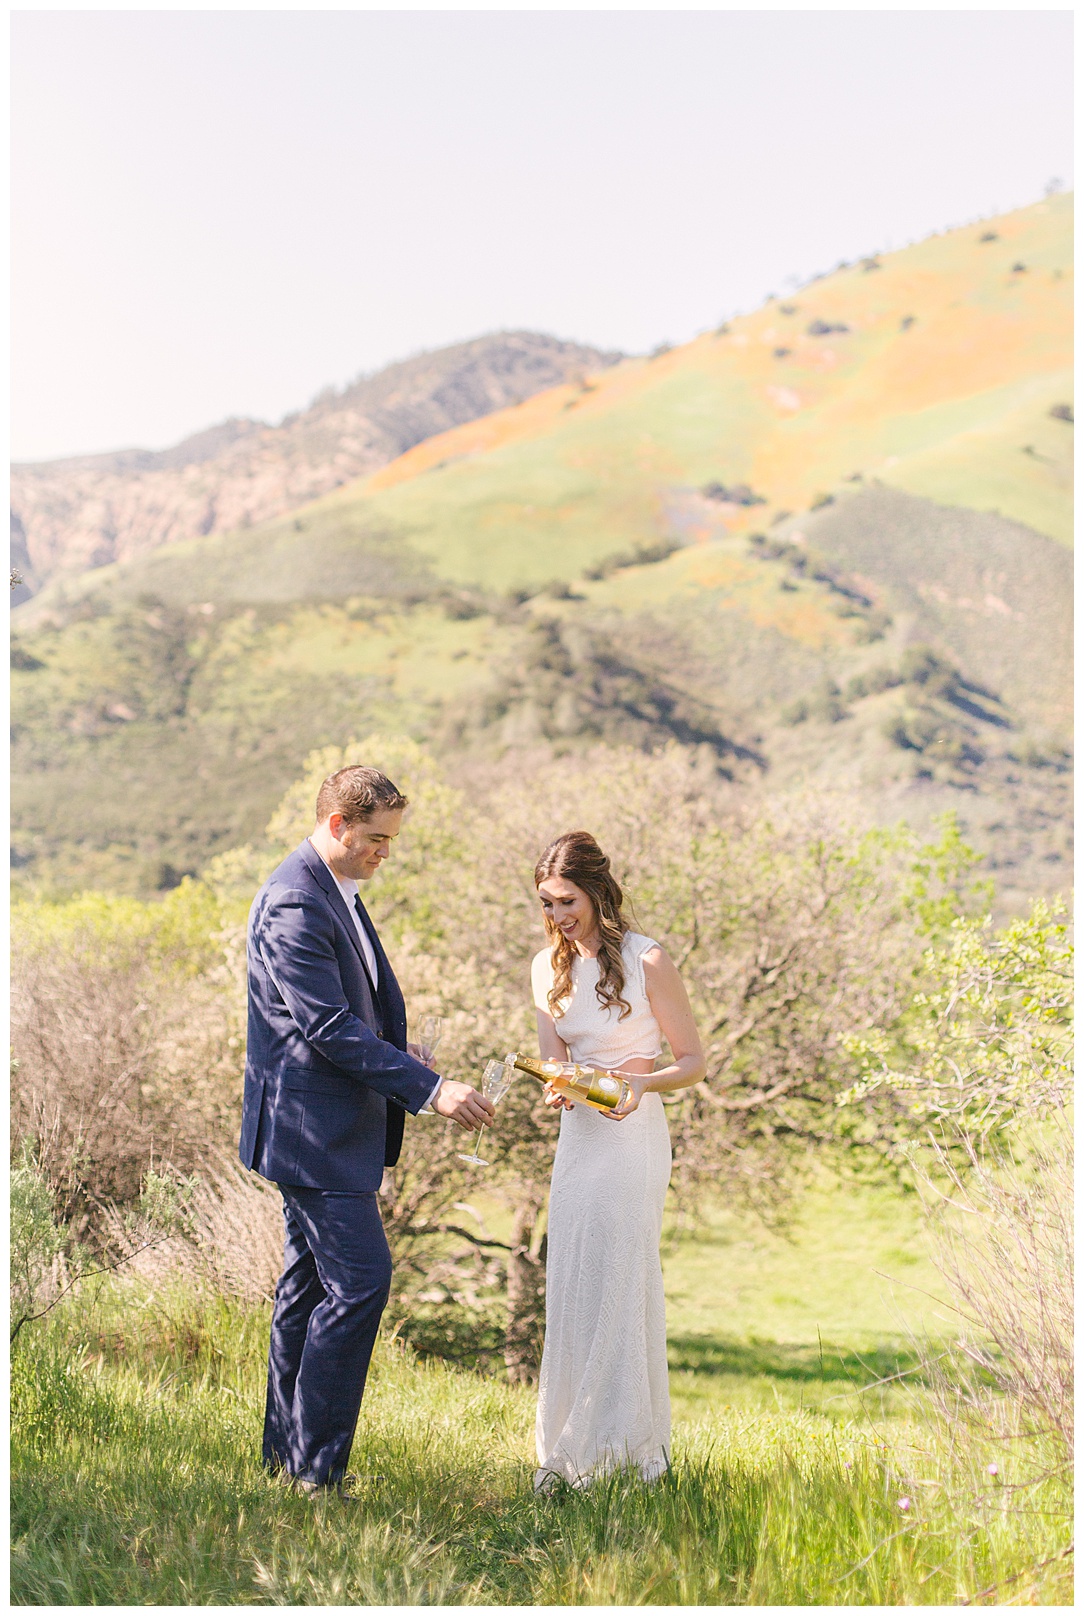 Lindsey Drewes Wedding Photography - Mattei's Tavern Wedding, Los Olivos Wedding, Santa Ynez Wedding